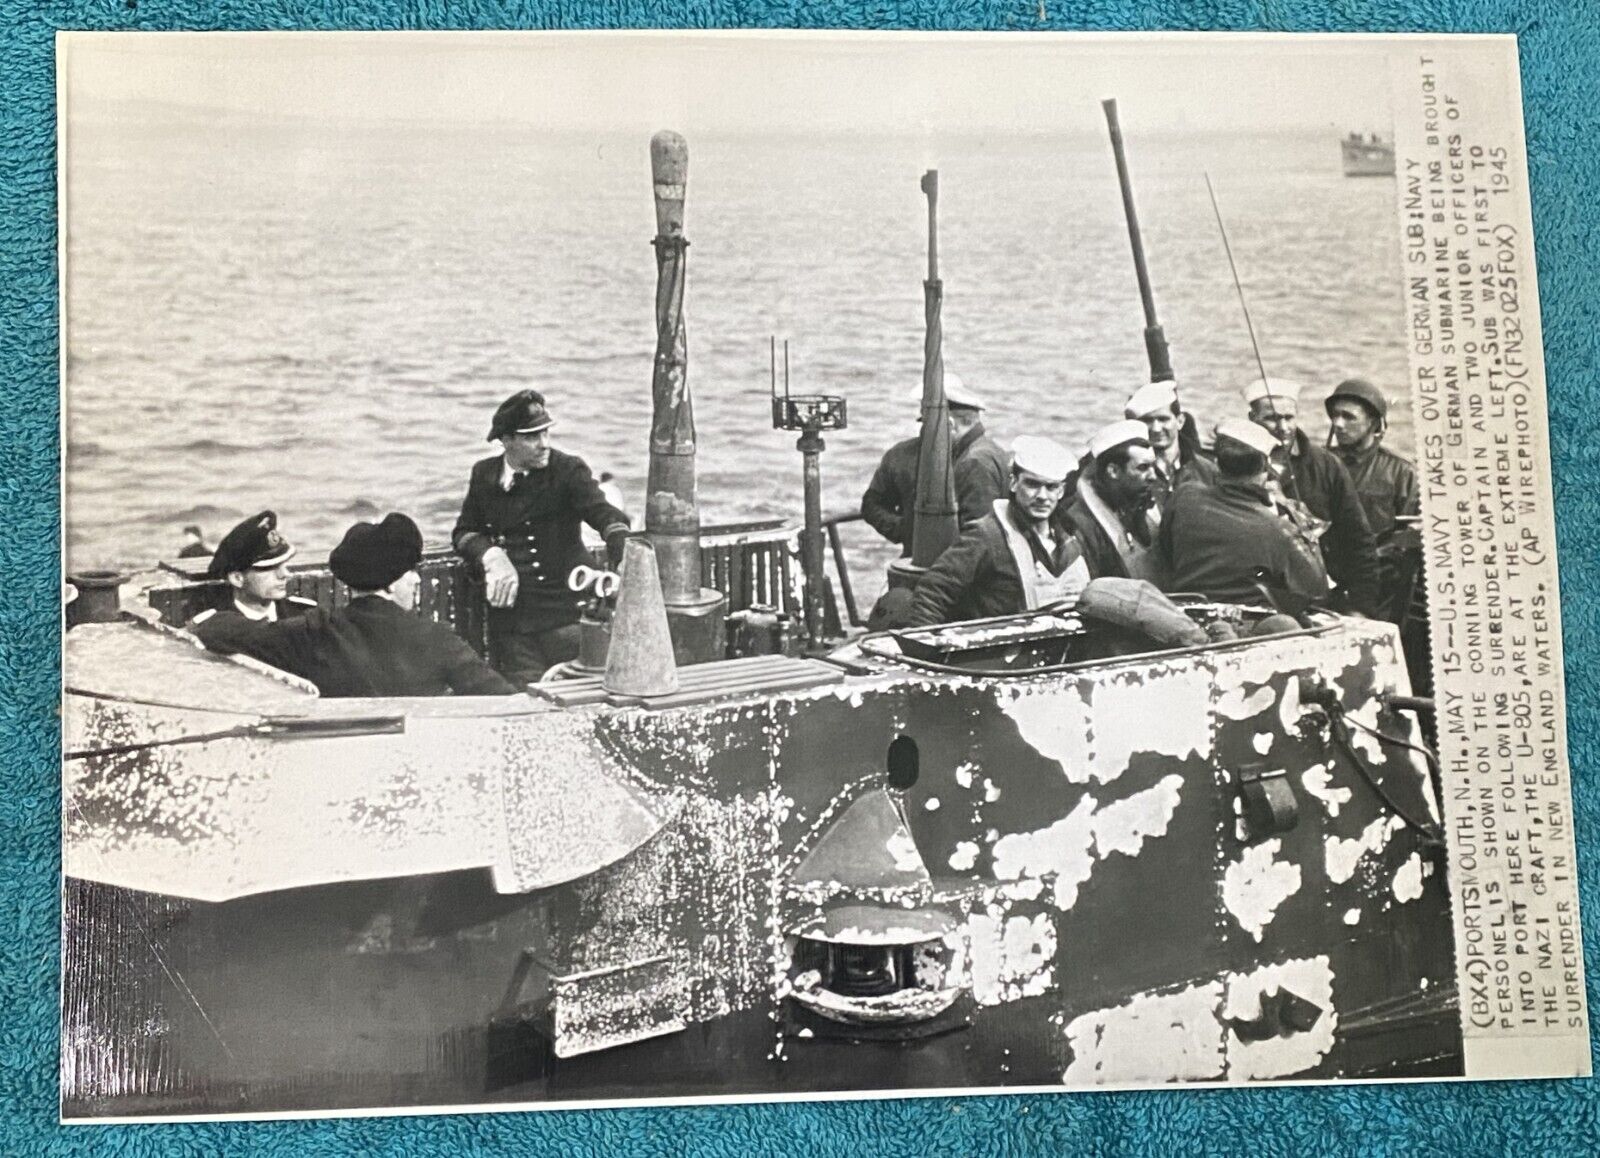 WW2 Surrender of U-805 German Submarine May 1945 - Portsmouth NH - Ships Free